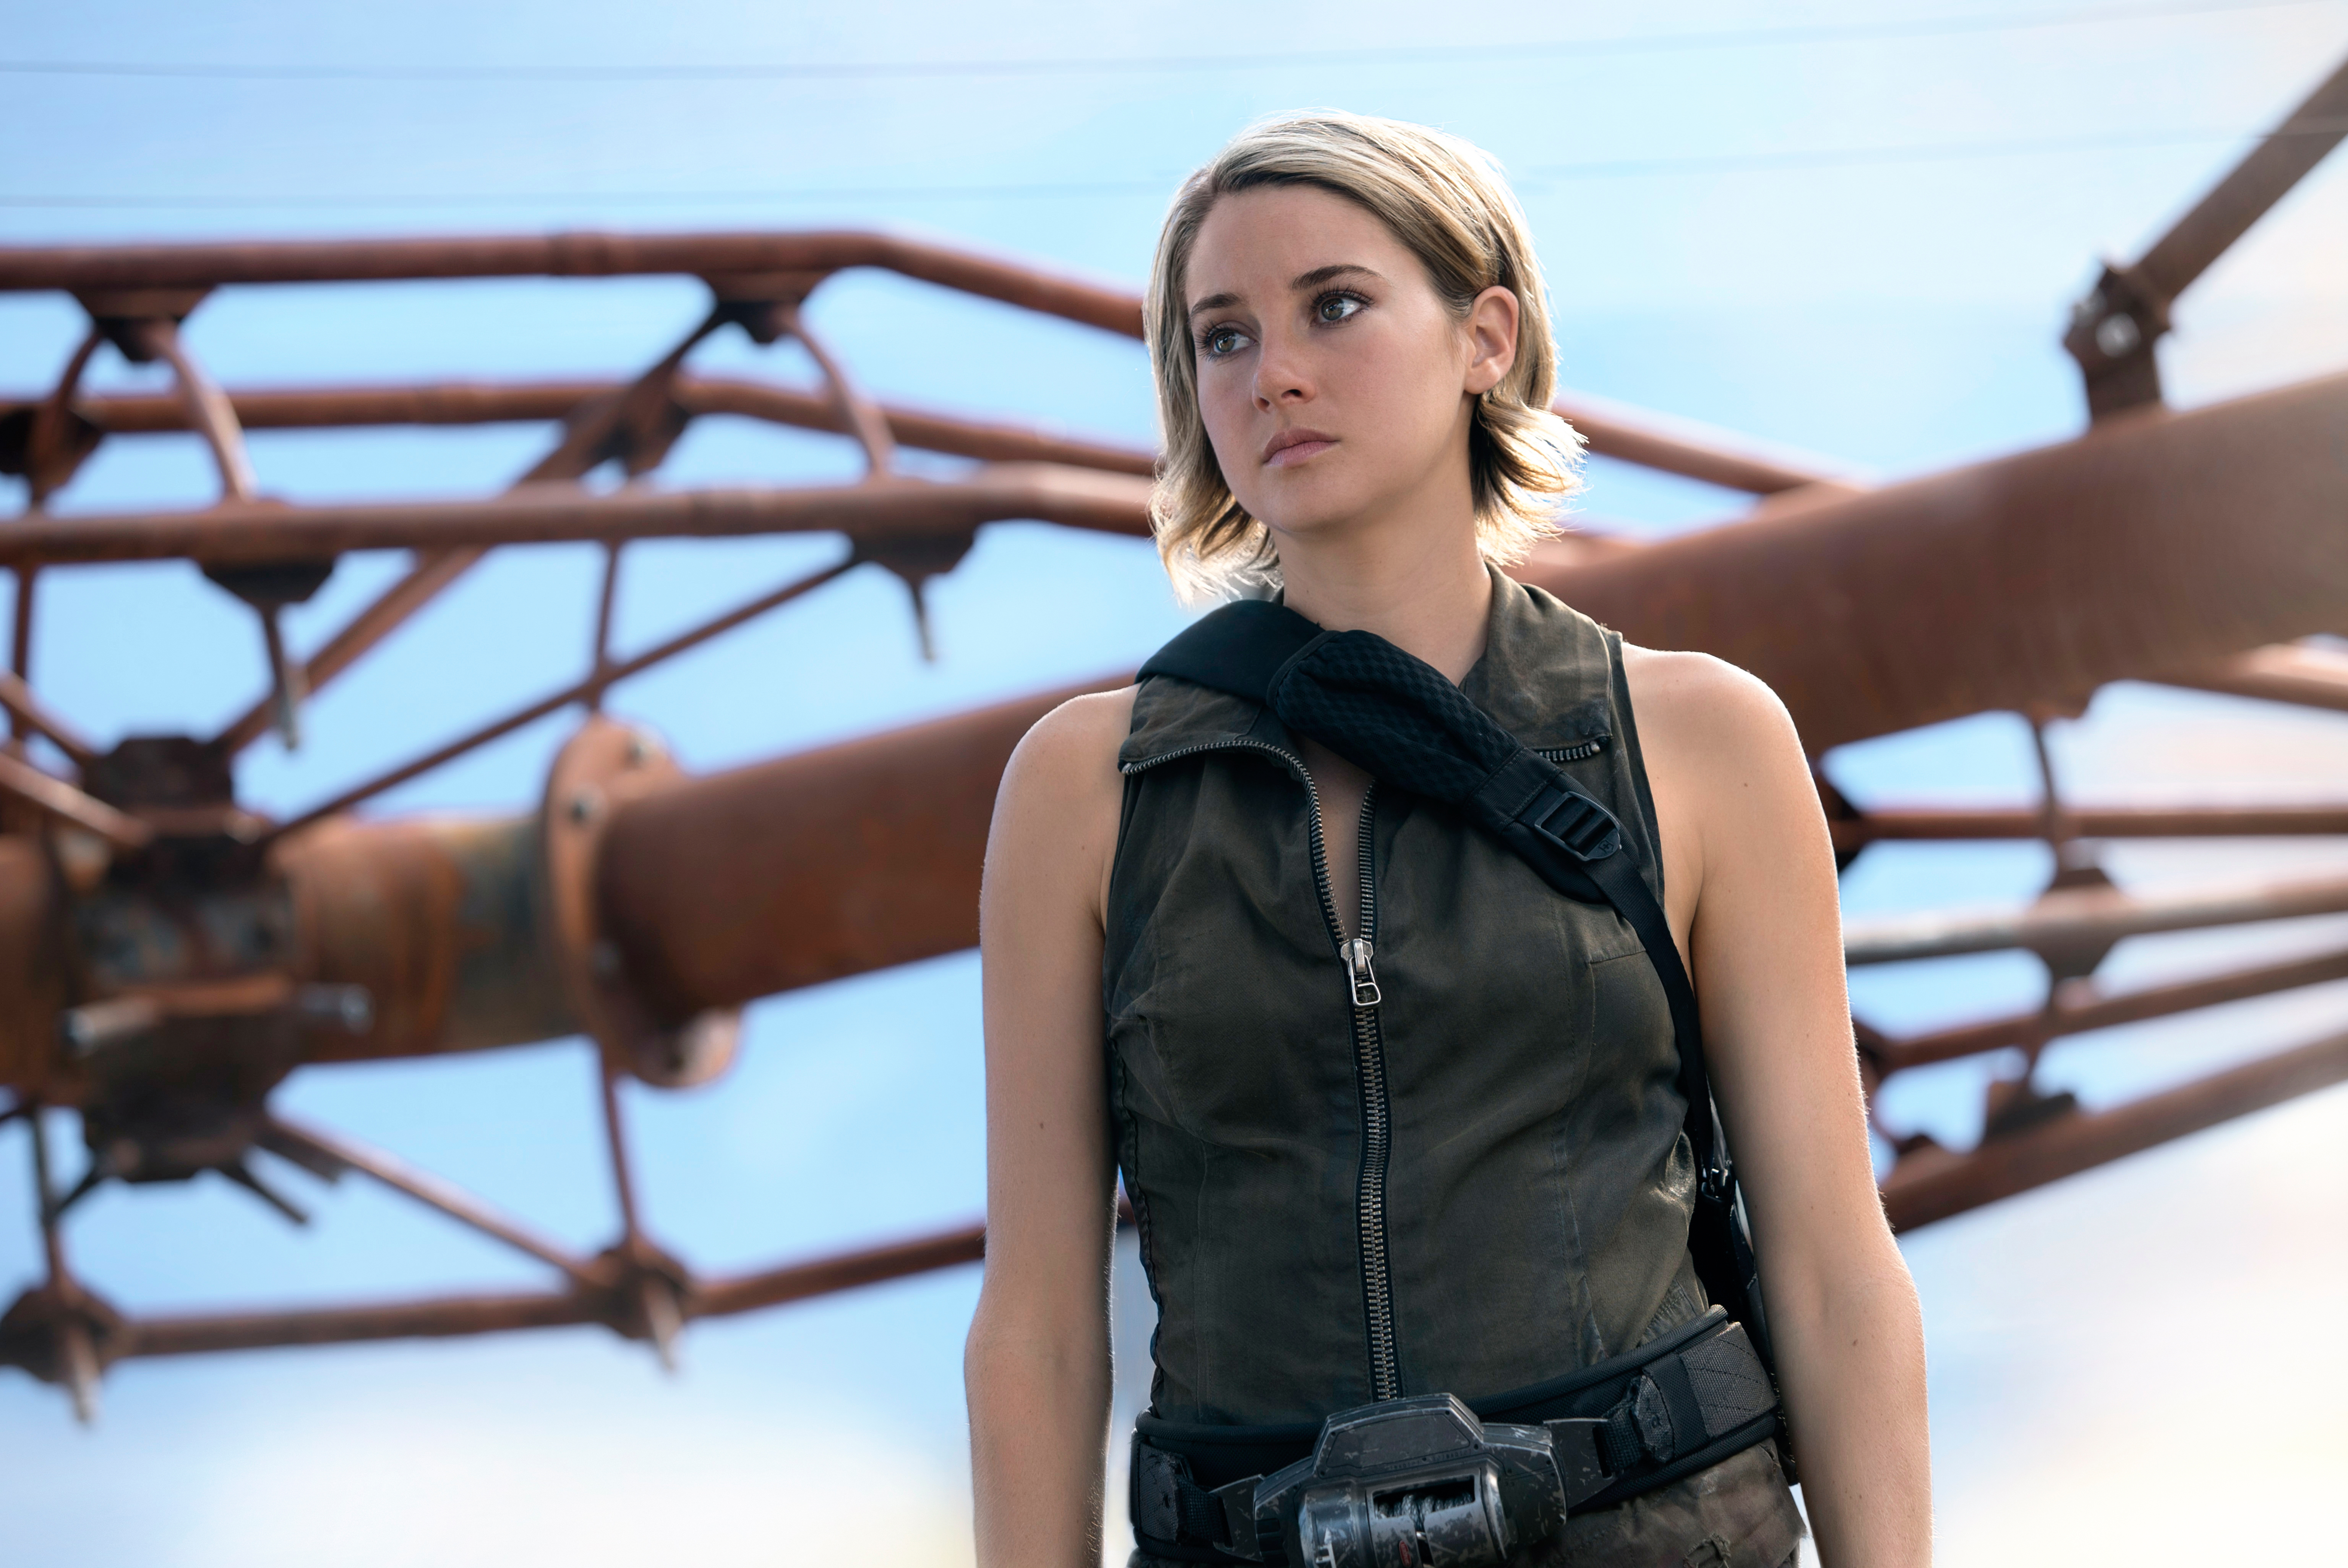 Movie The Divergent Series: Allegiant HD Wallpaper | Background Image